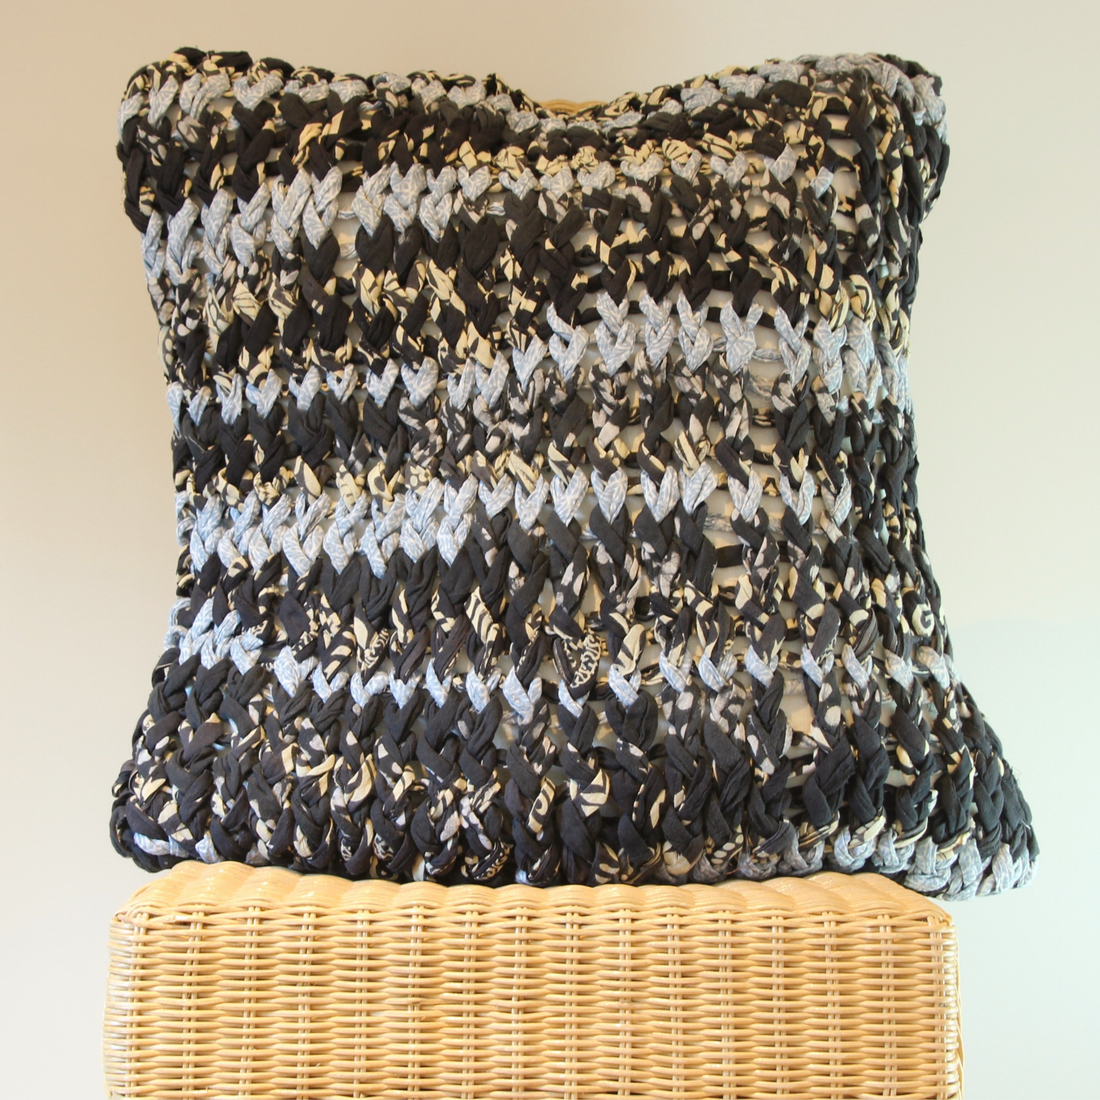 Cushions fair trade ethical sustainable fashion Chunky Knit Cushion Covers -Shadows conscious purchase Basha